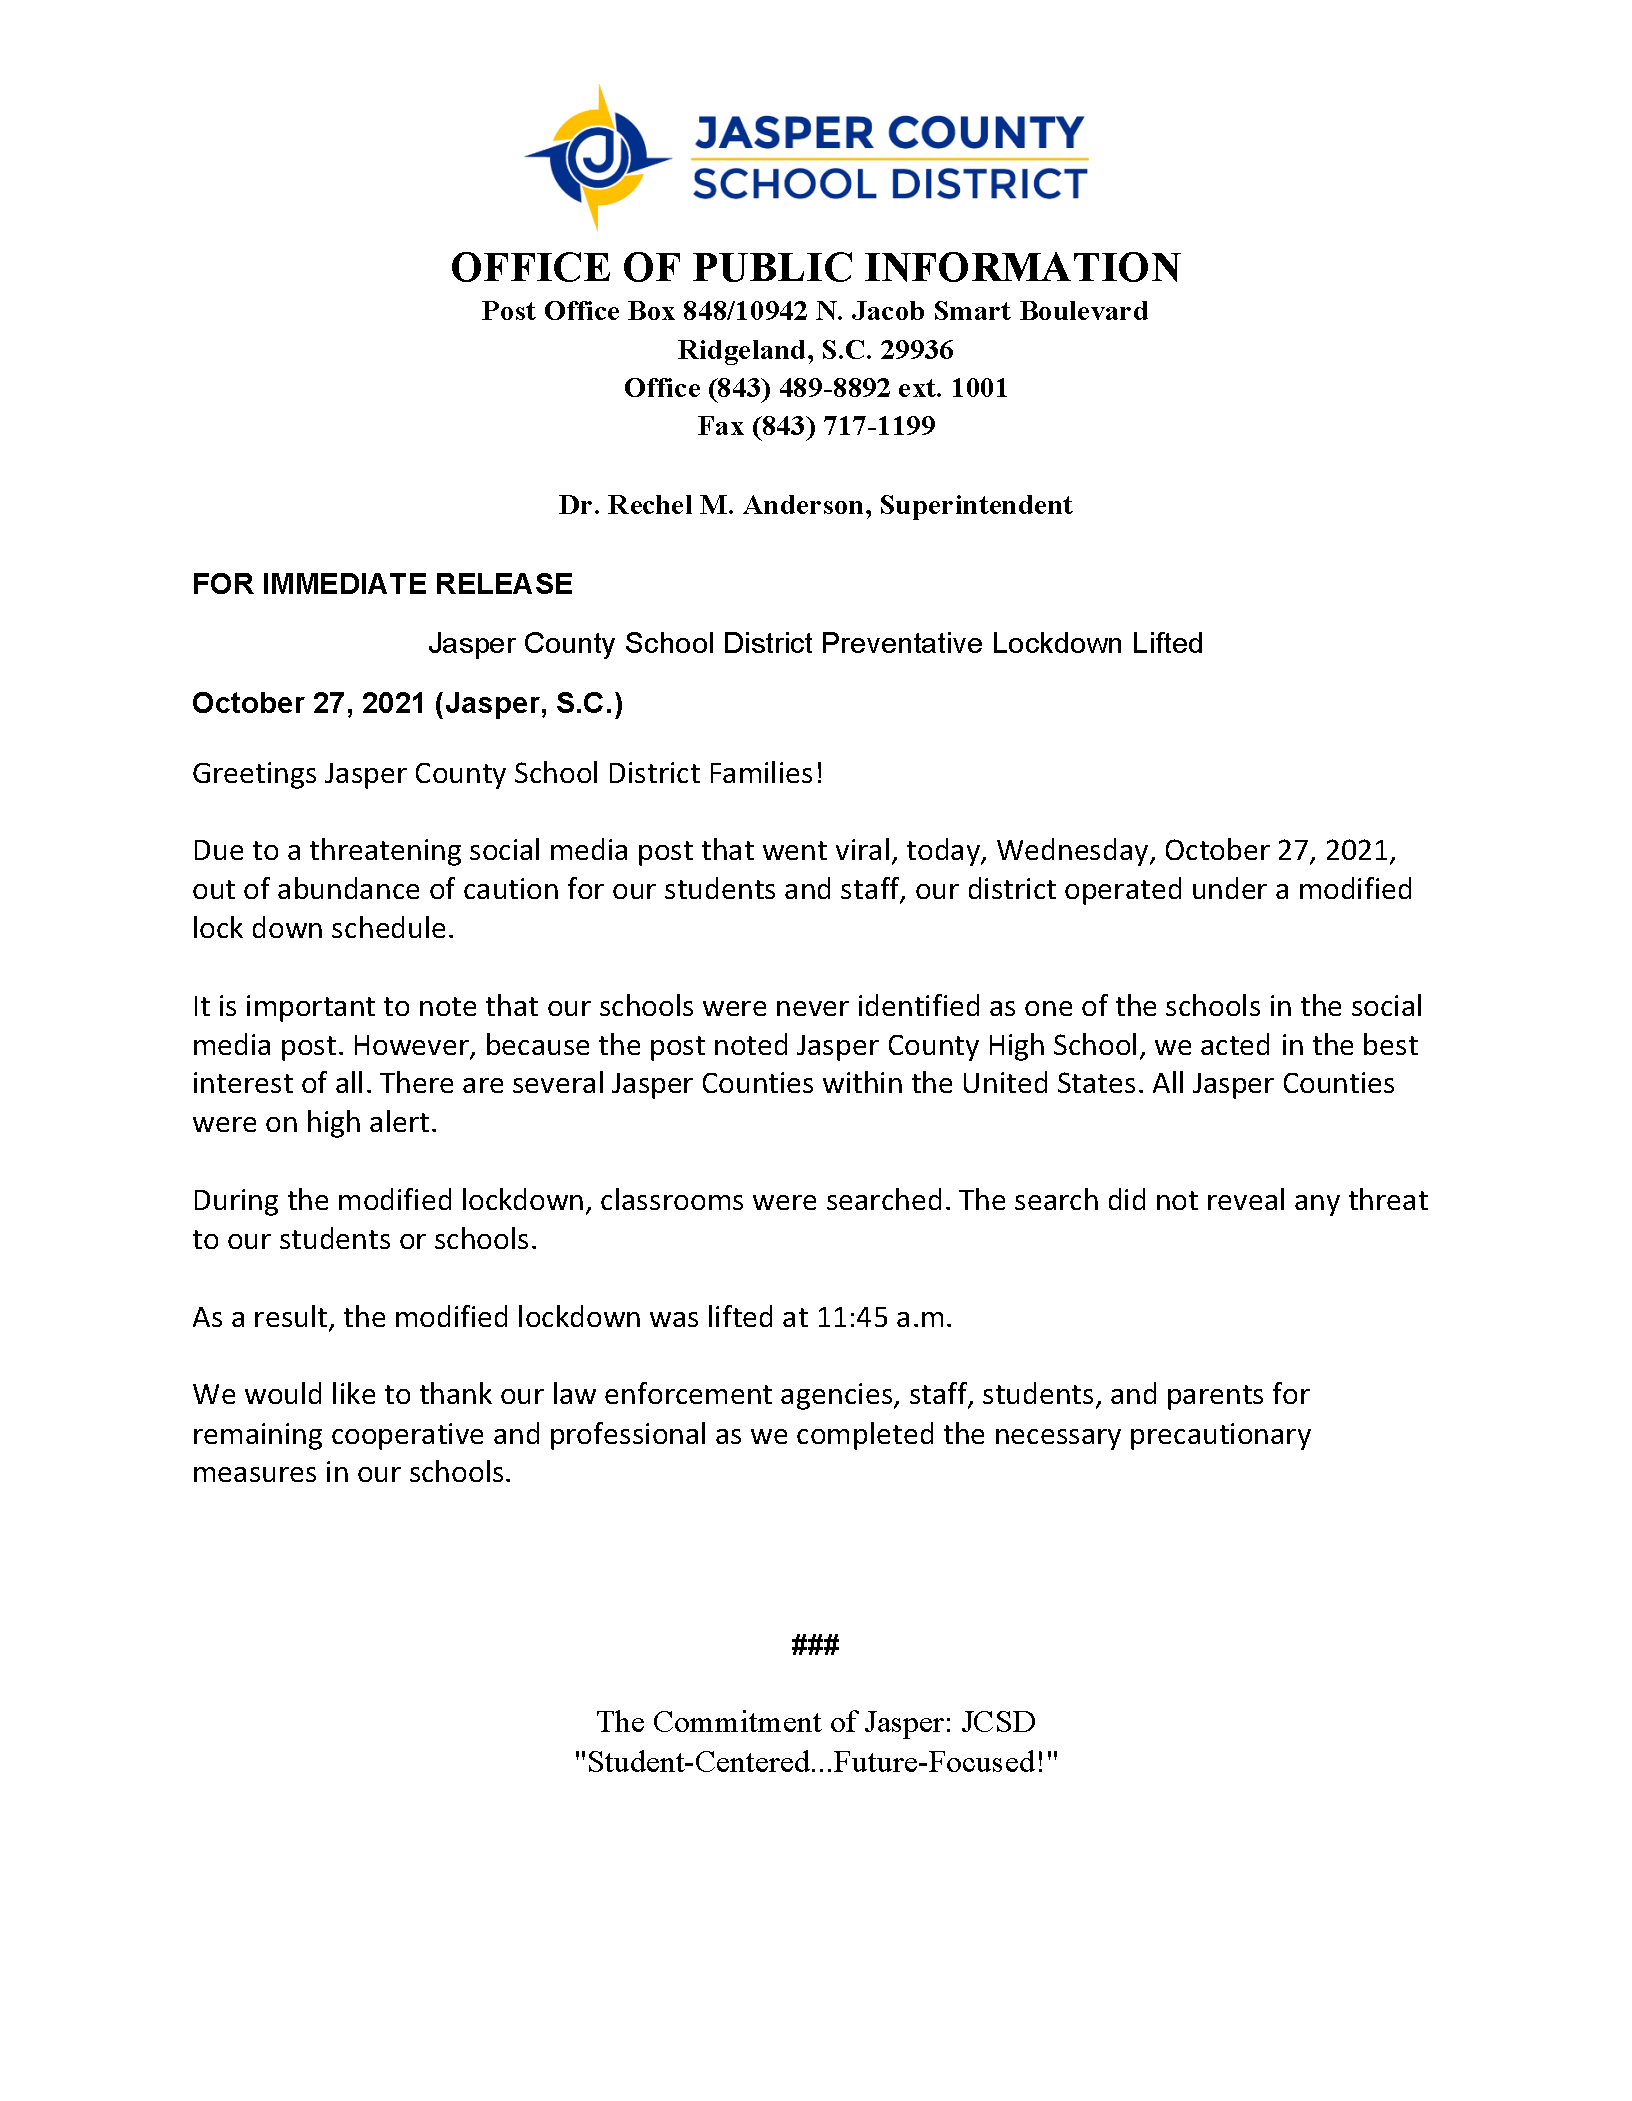 Jasper County School District Preventative Lockdown Lifted Press Release (October 27, 2021)